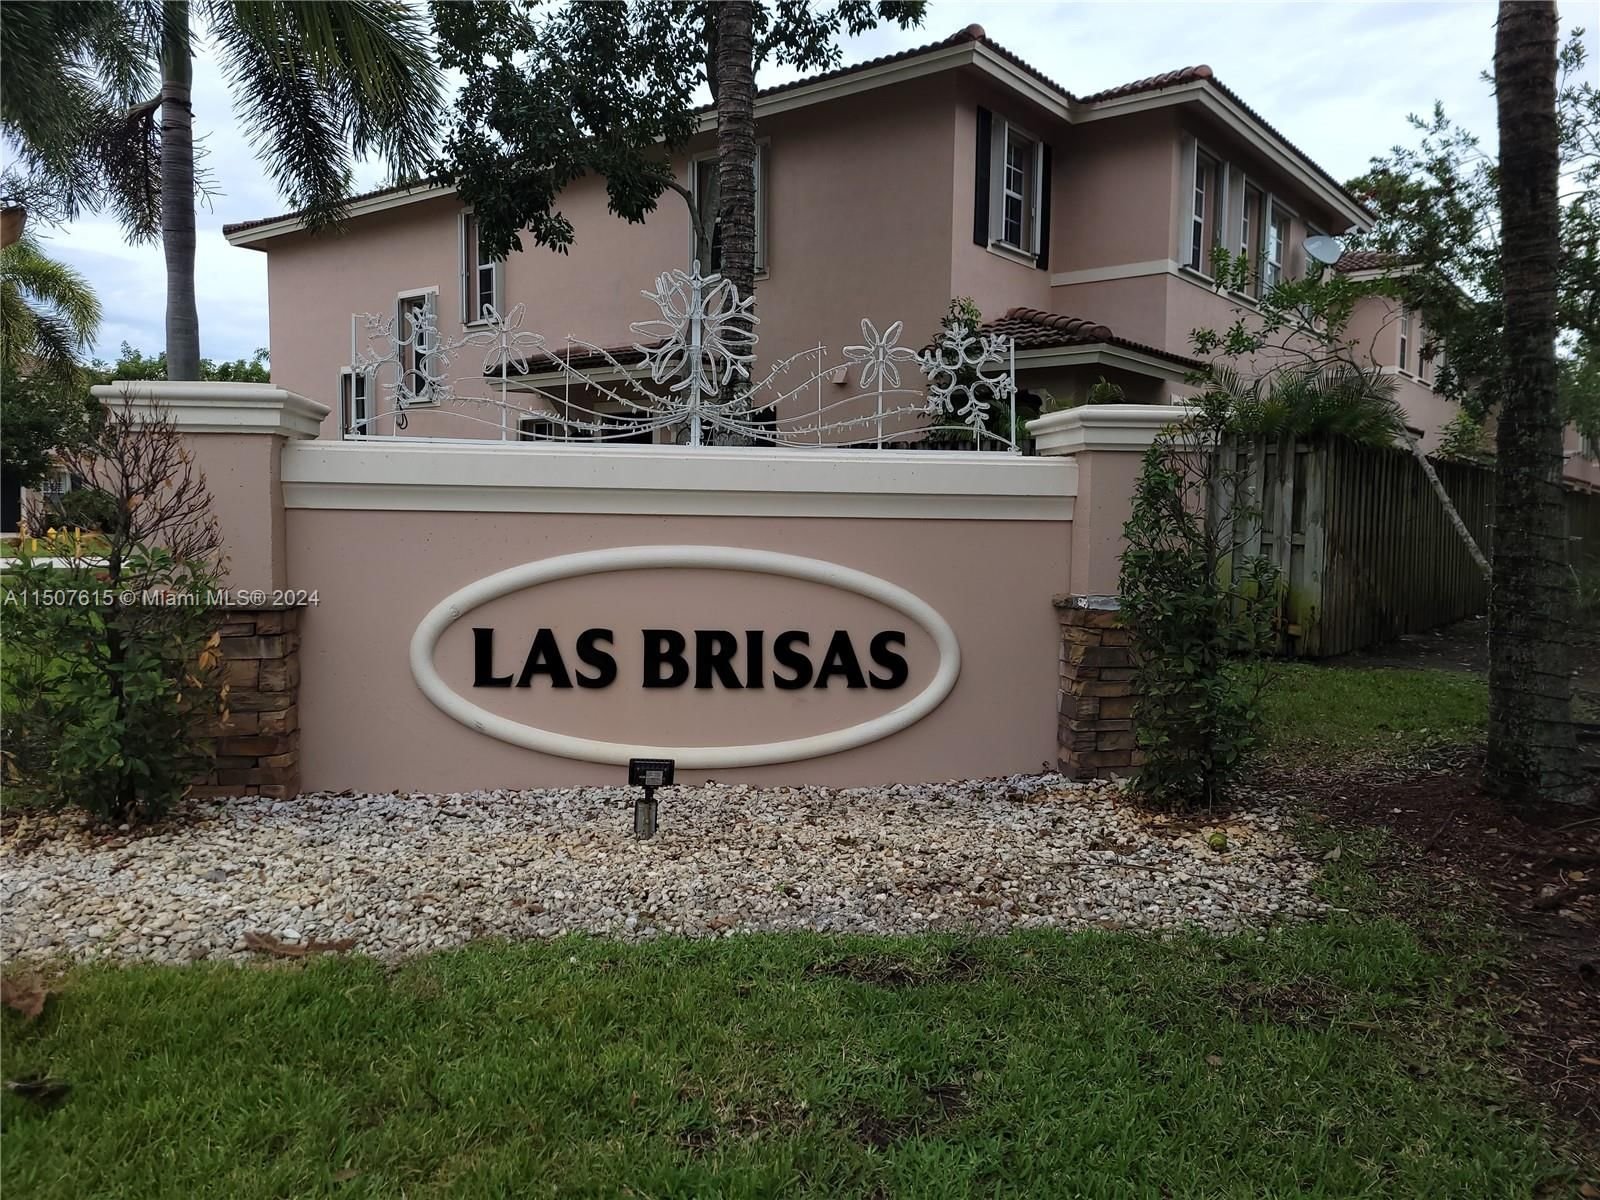 Real estate property located at 293 Las Brisas Cir, Broward County, F AND H PLAT, Sunrise, FL